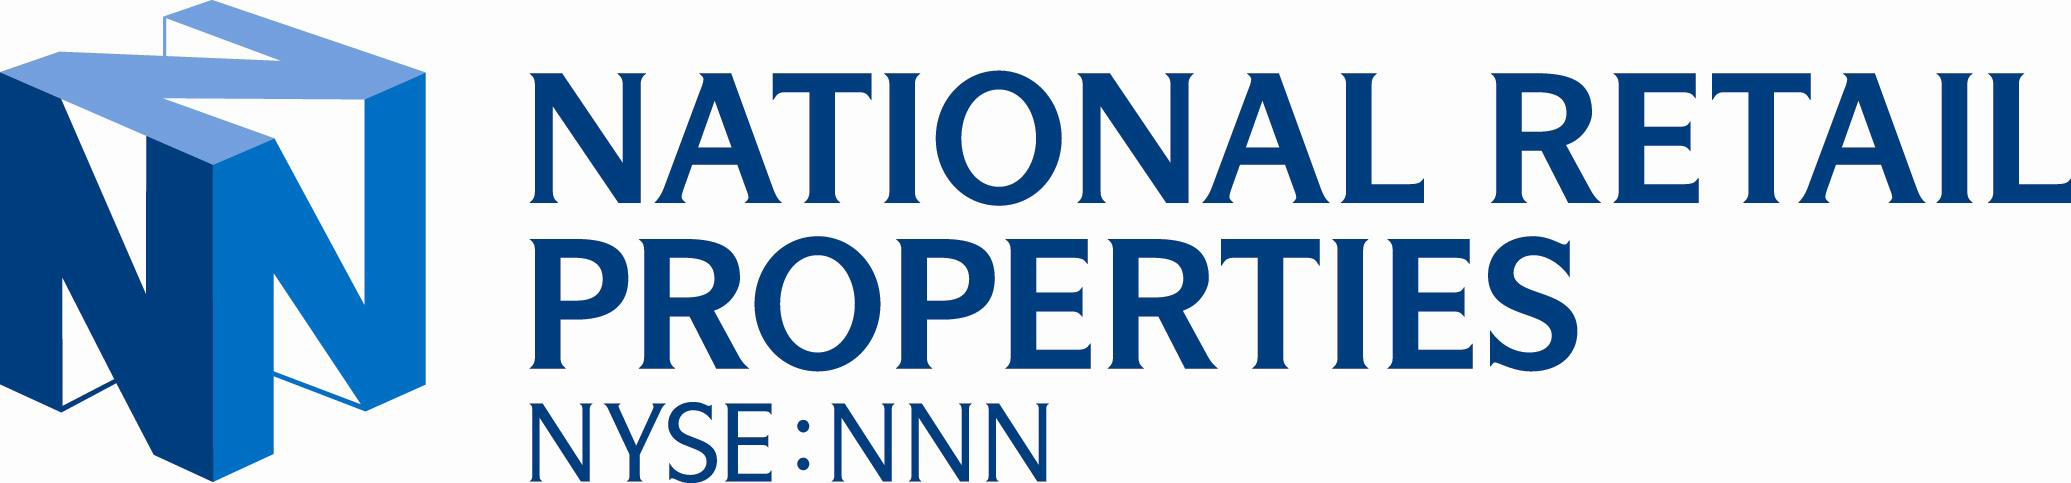 B+E Institutional Clients: National Retail Properties REIT